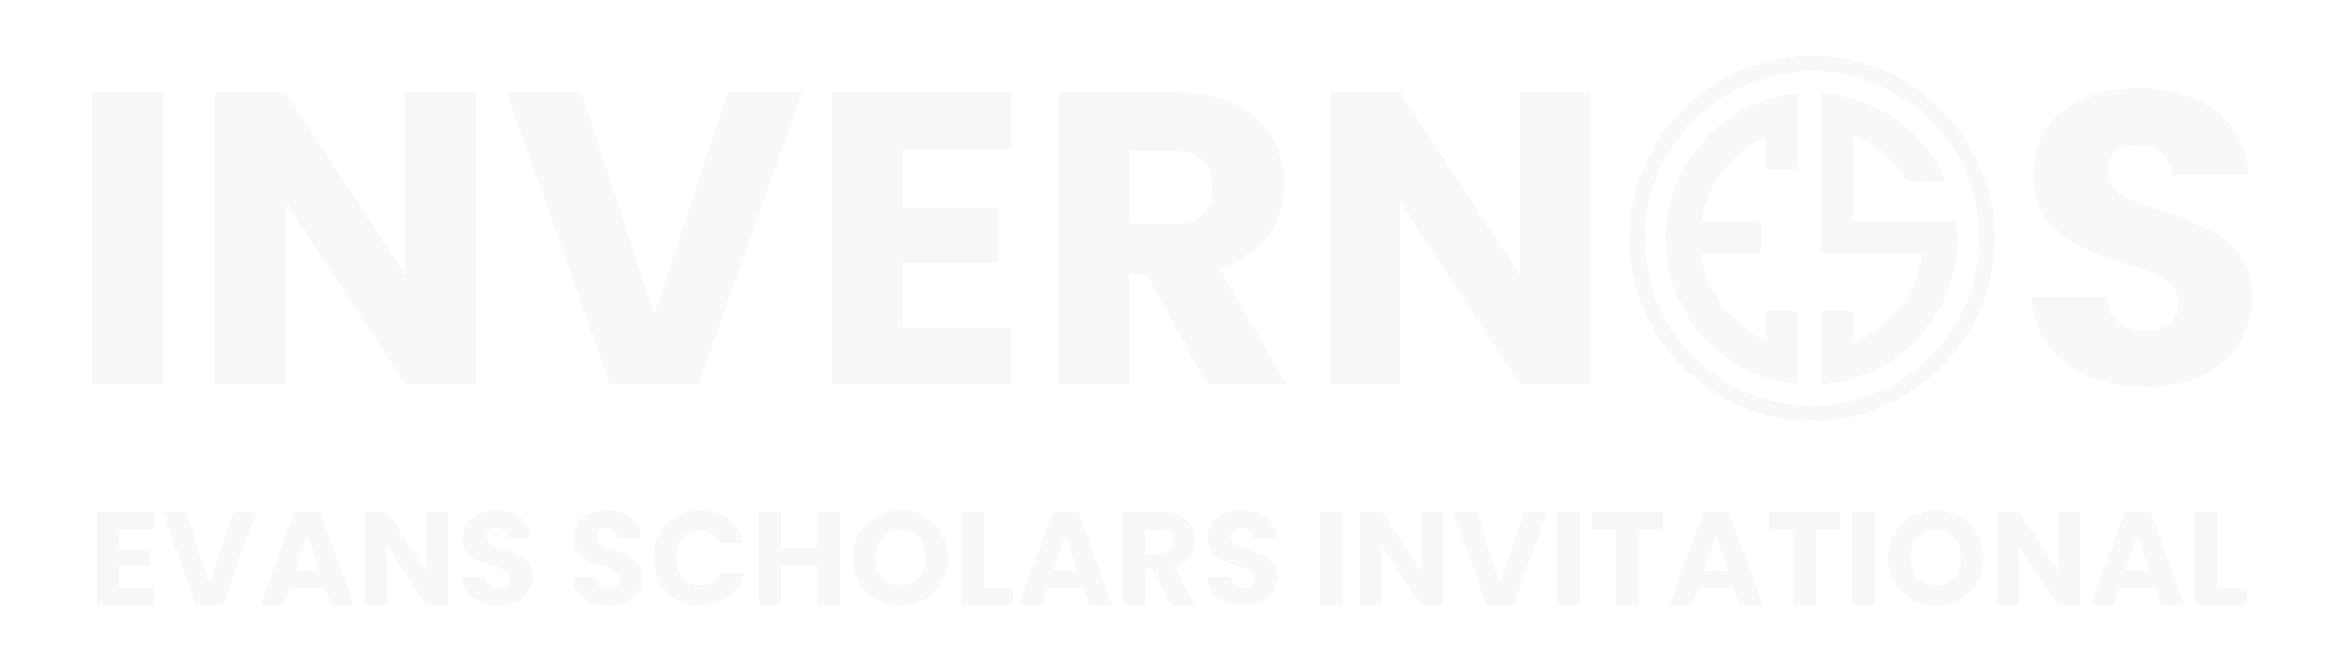 inverness evans scholars invitational logo